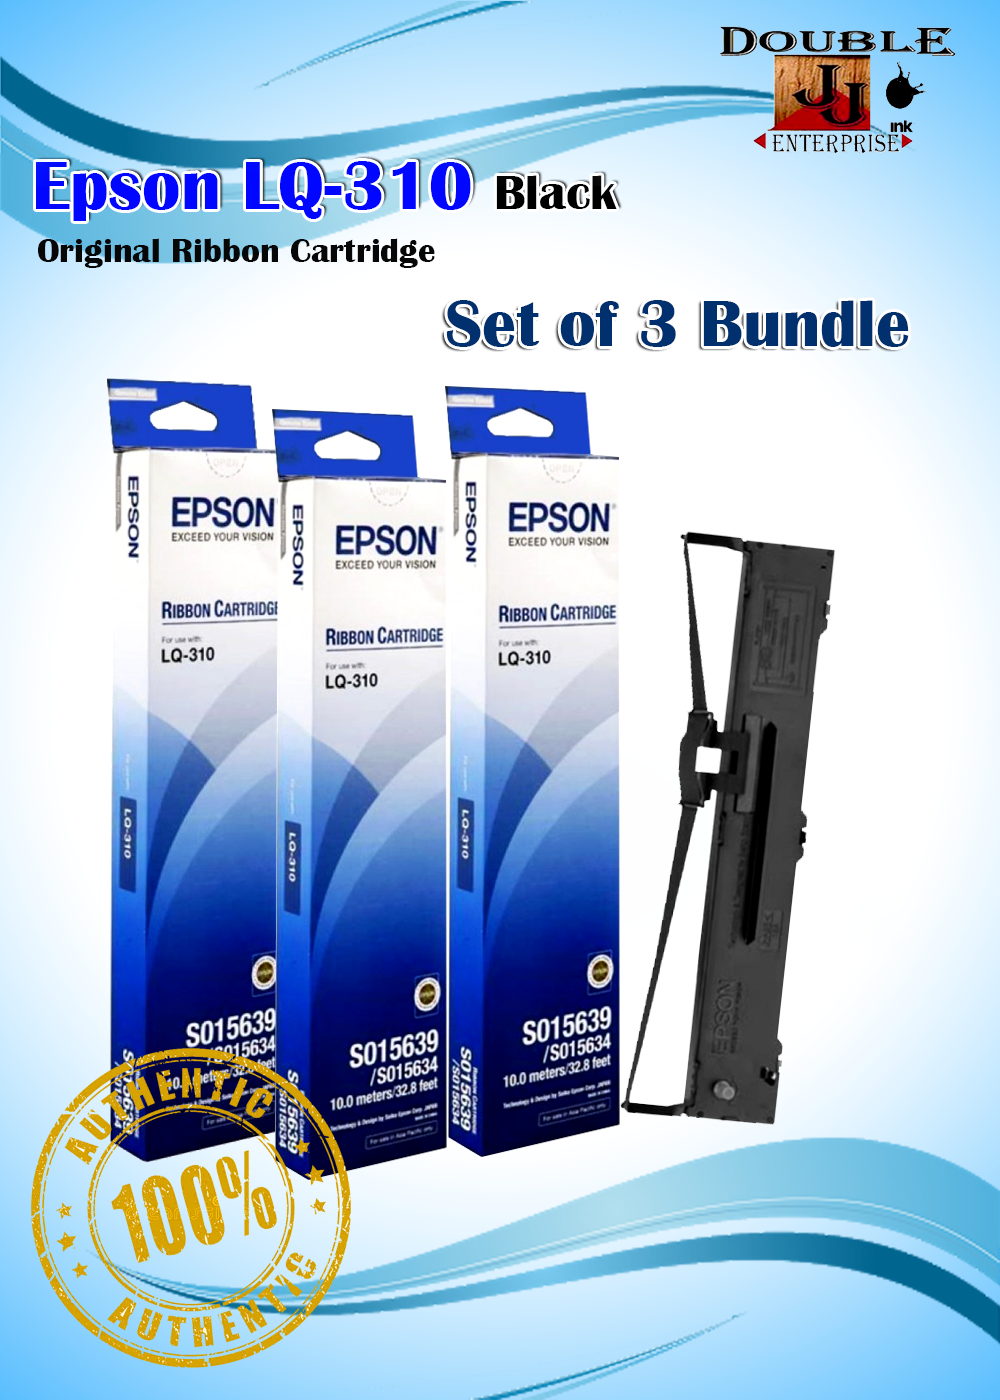 Epson Lq 310 Ribbon Cartridge Set Of 3 Bundle Lazada Ph 4963